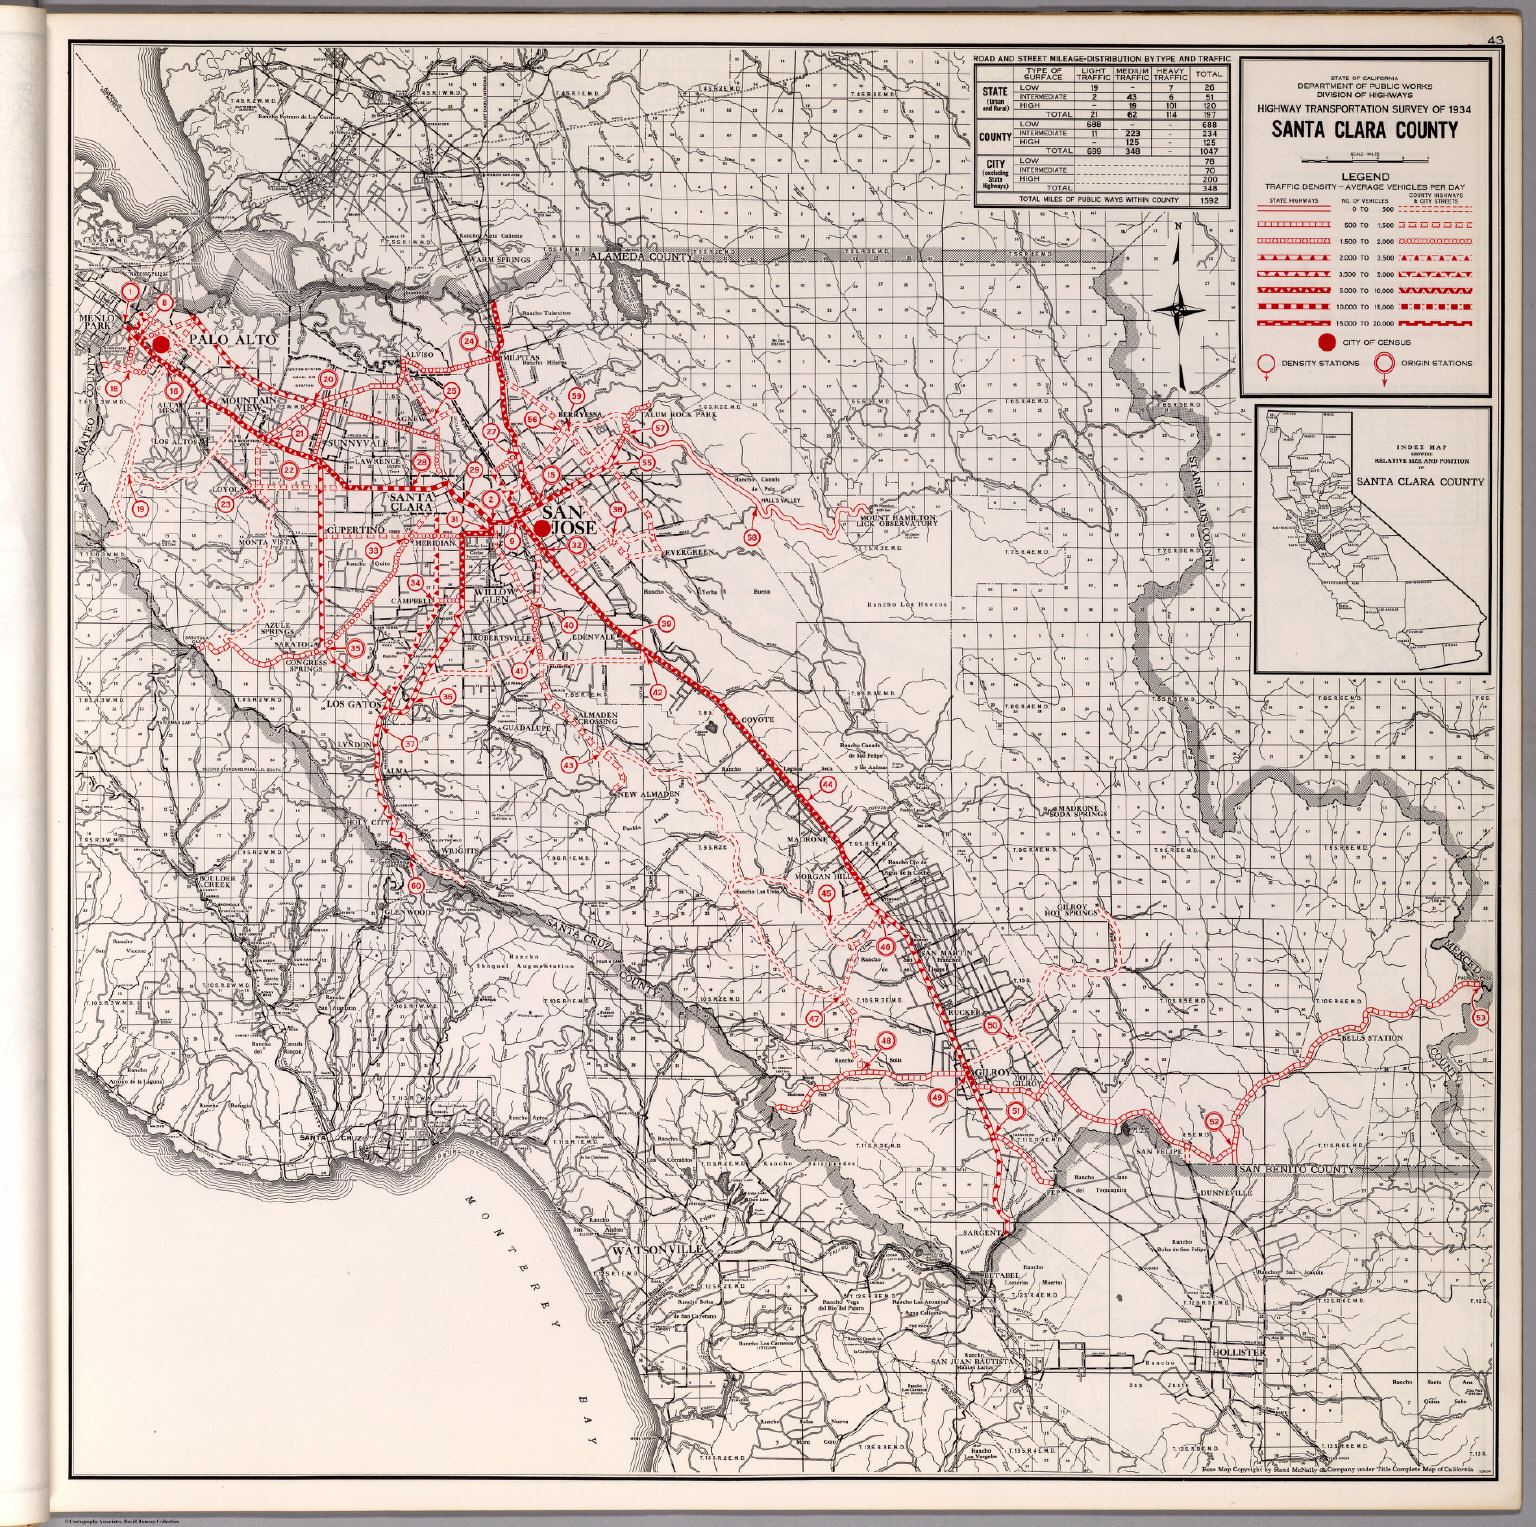 Santa Clara County David Rumsey Historical Map Collection